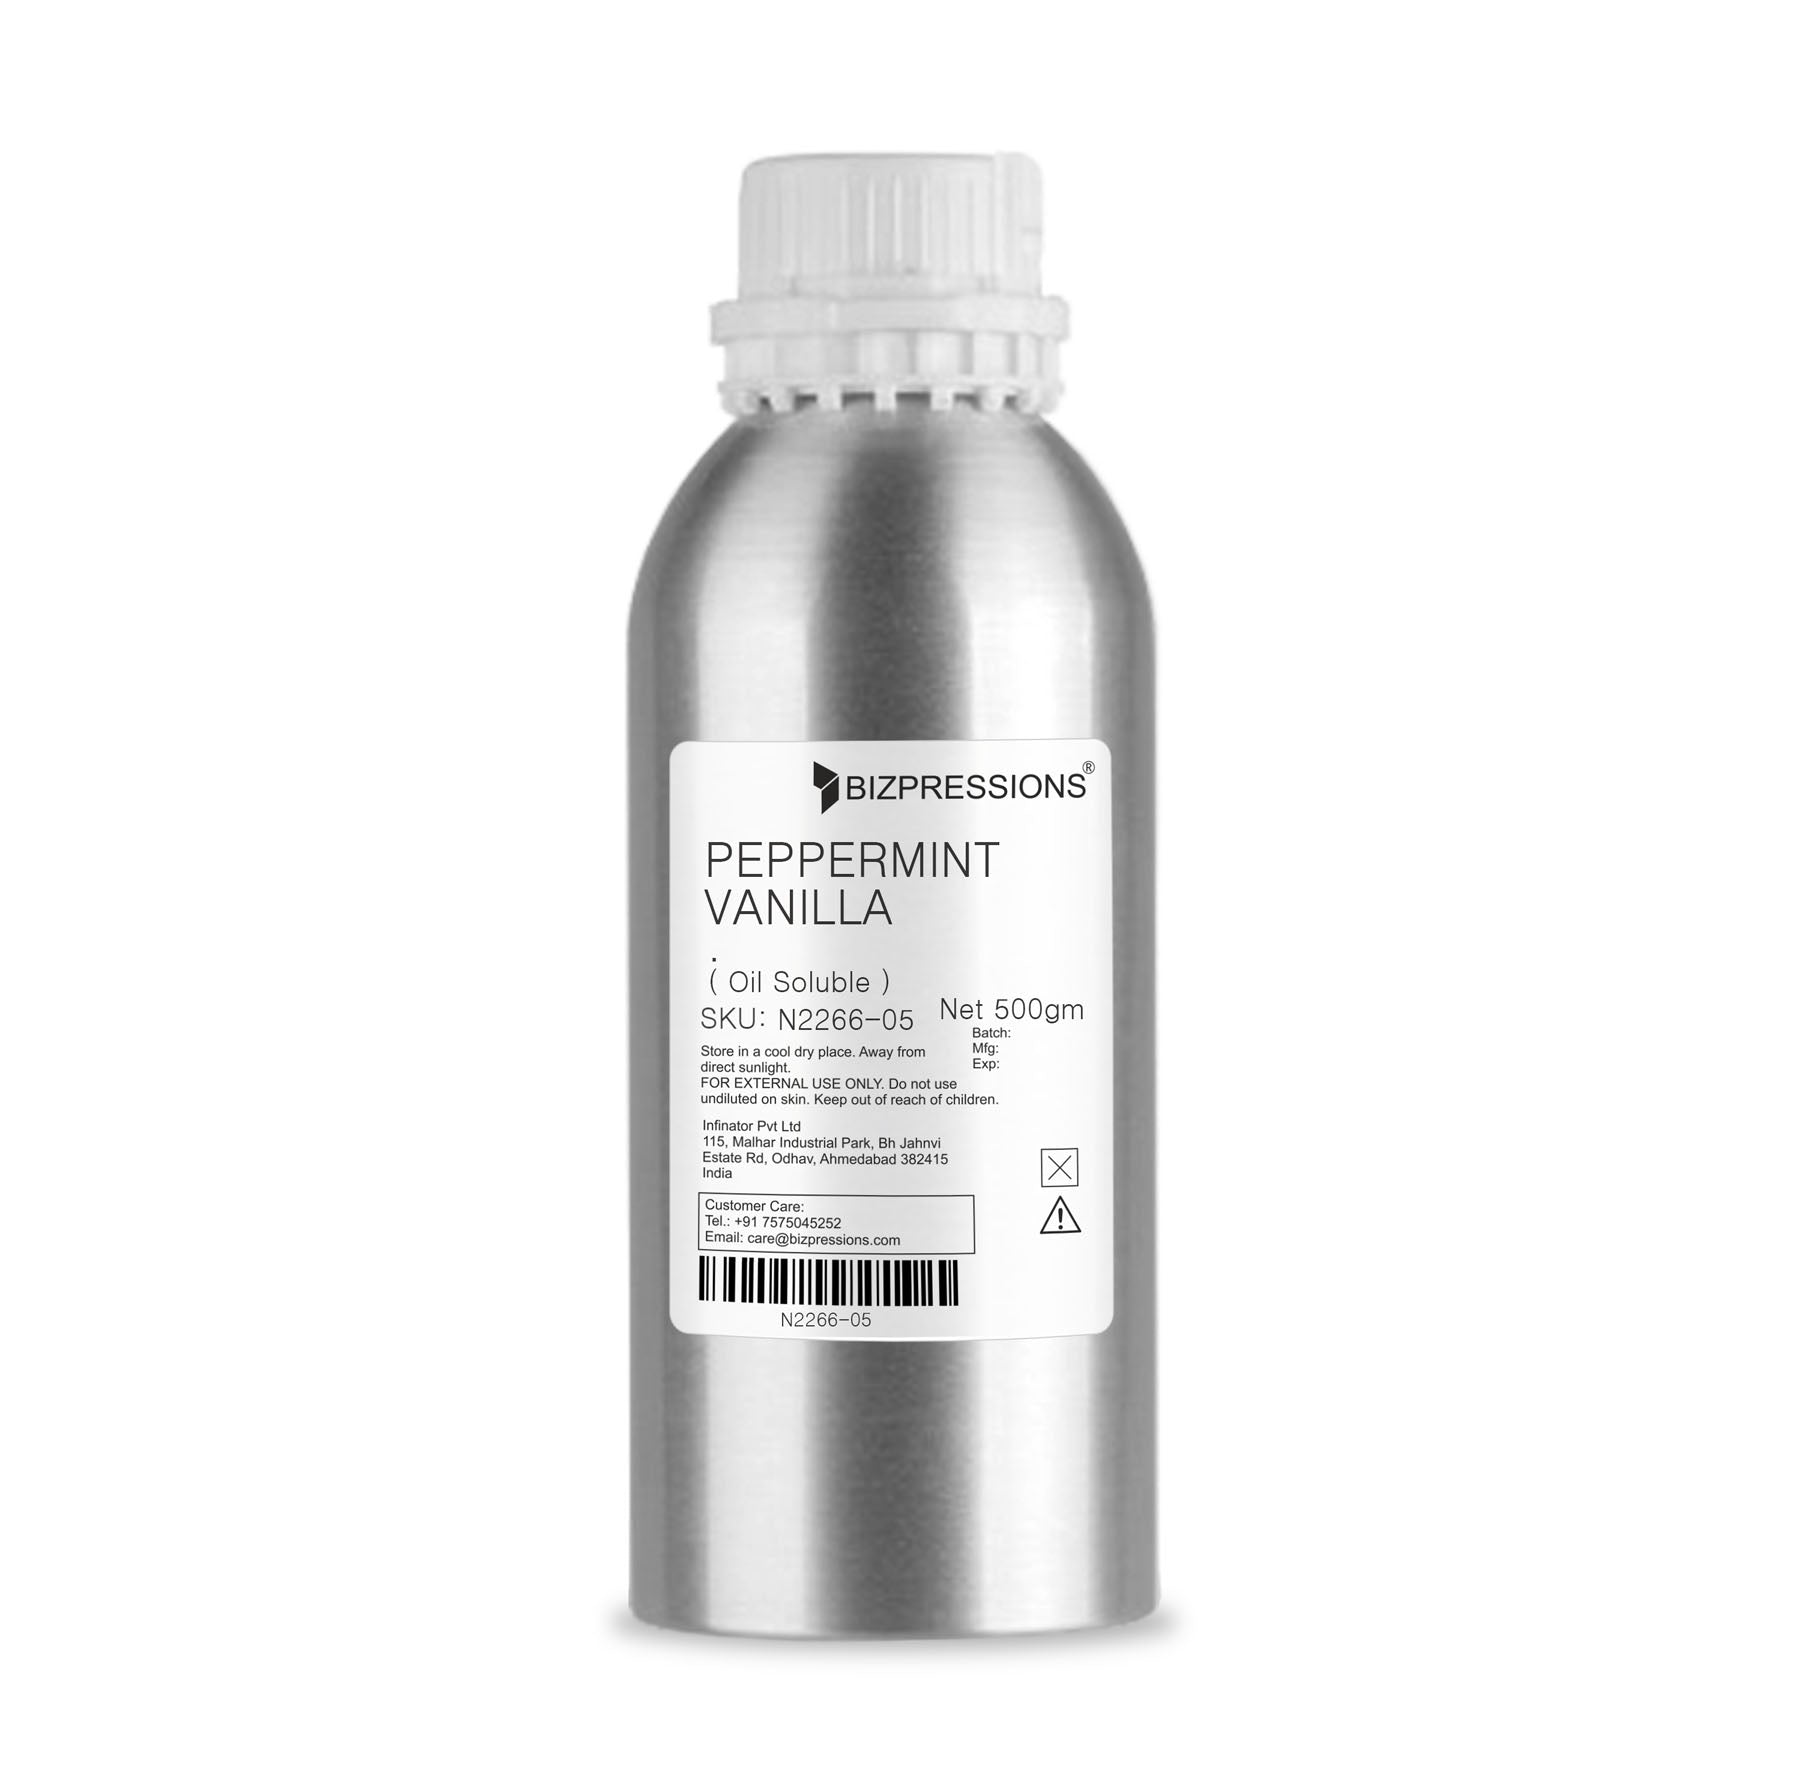 PEPPERMINT VANILLA - Fragrance ( Oil Soluble ) - 500 gm